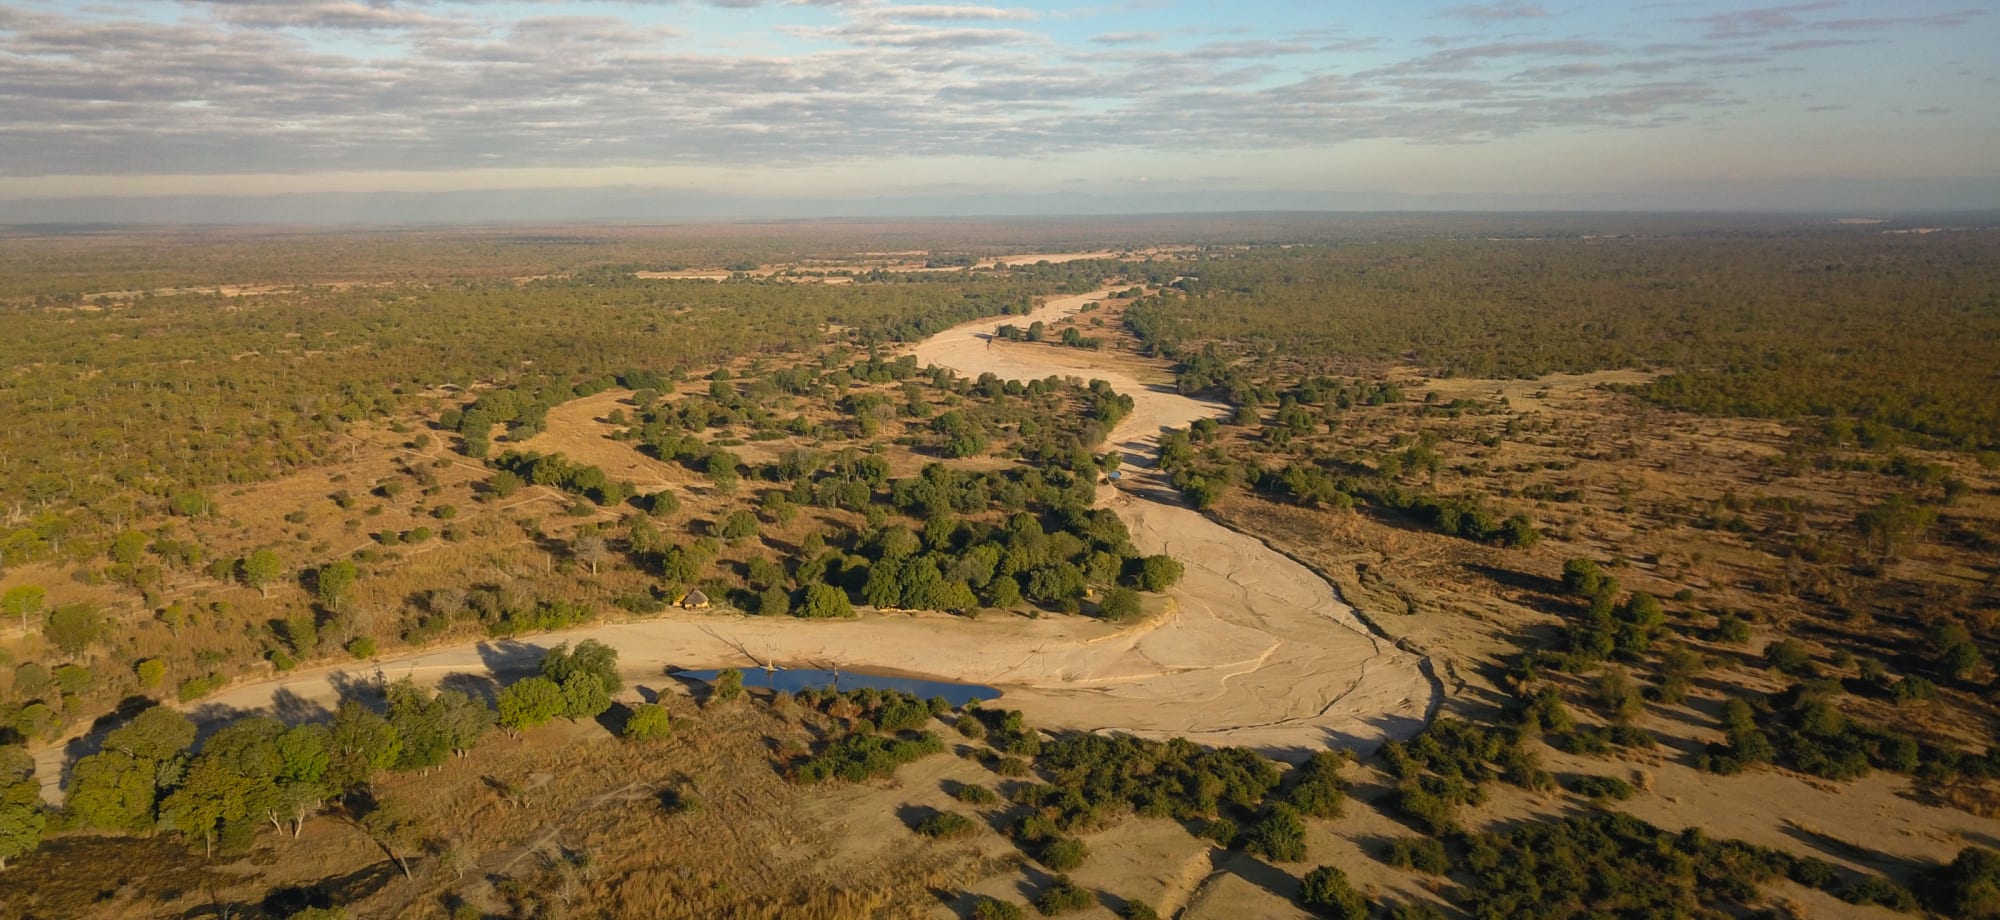 Zambia_Nsolo_aerial_view